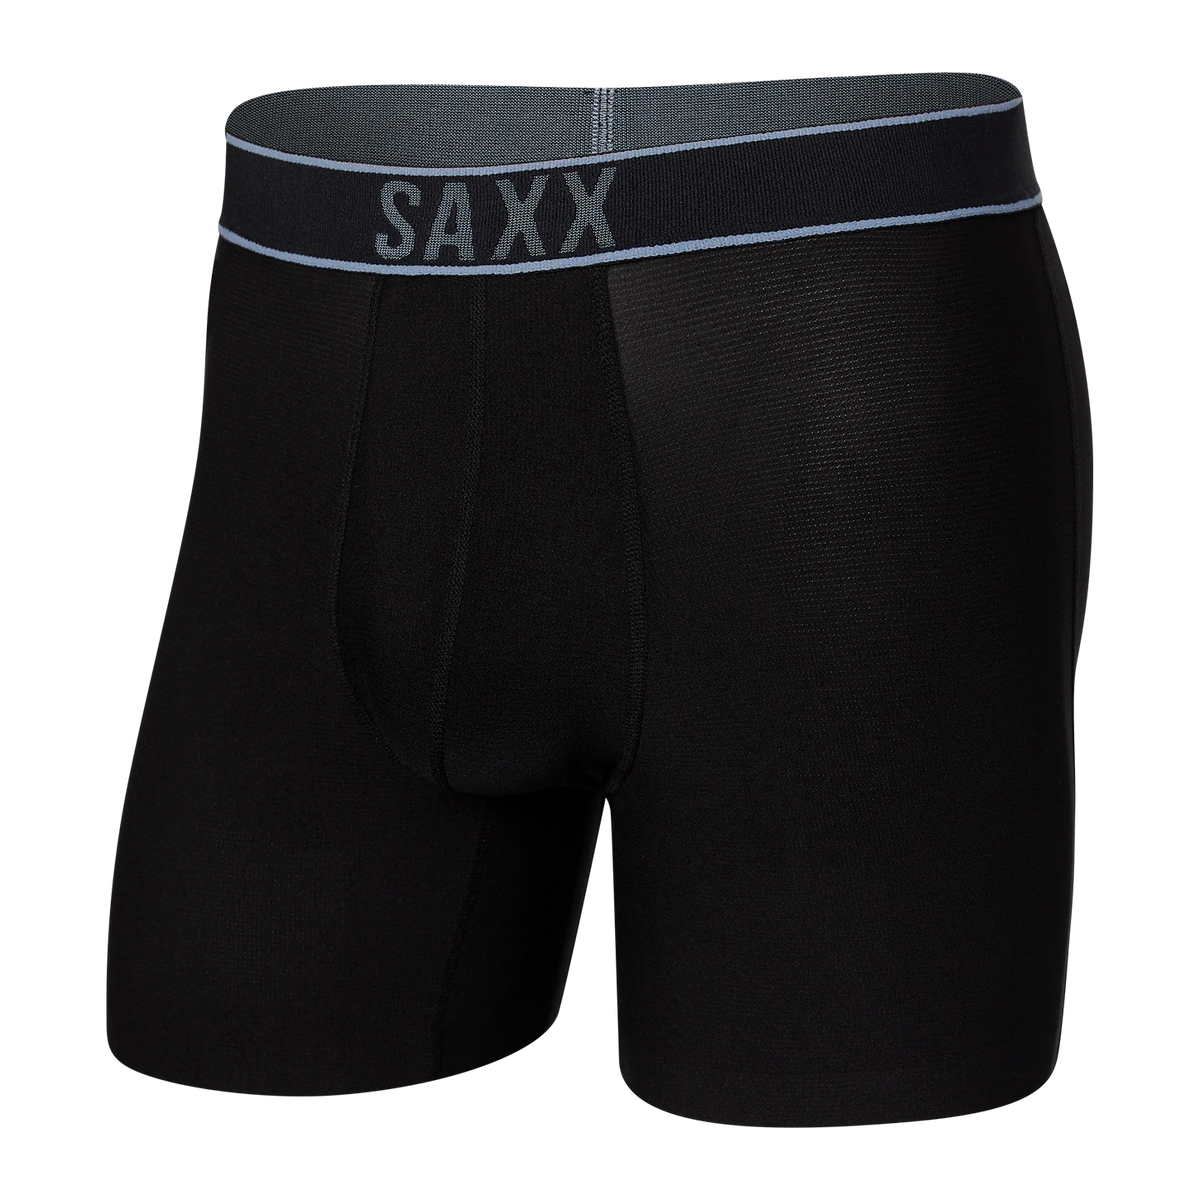 Saxx Droptemp Cool Hydro Boxer Brief